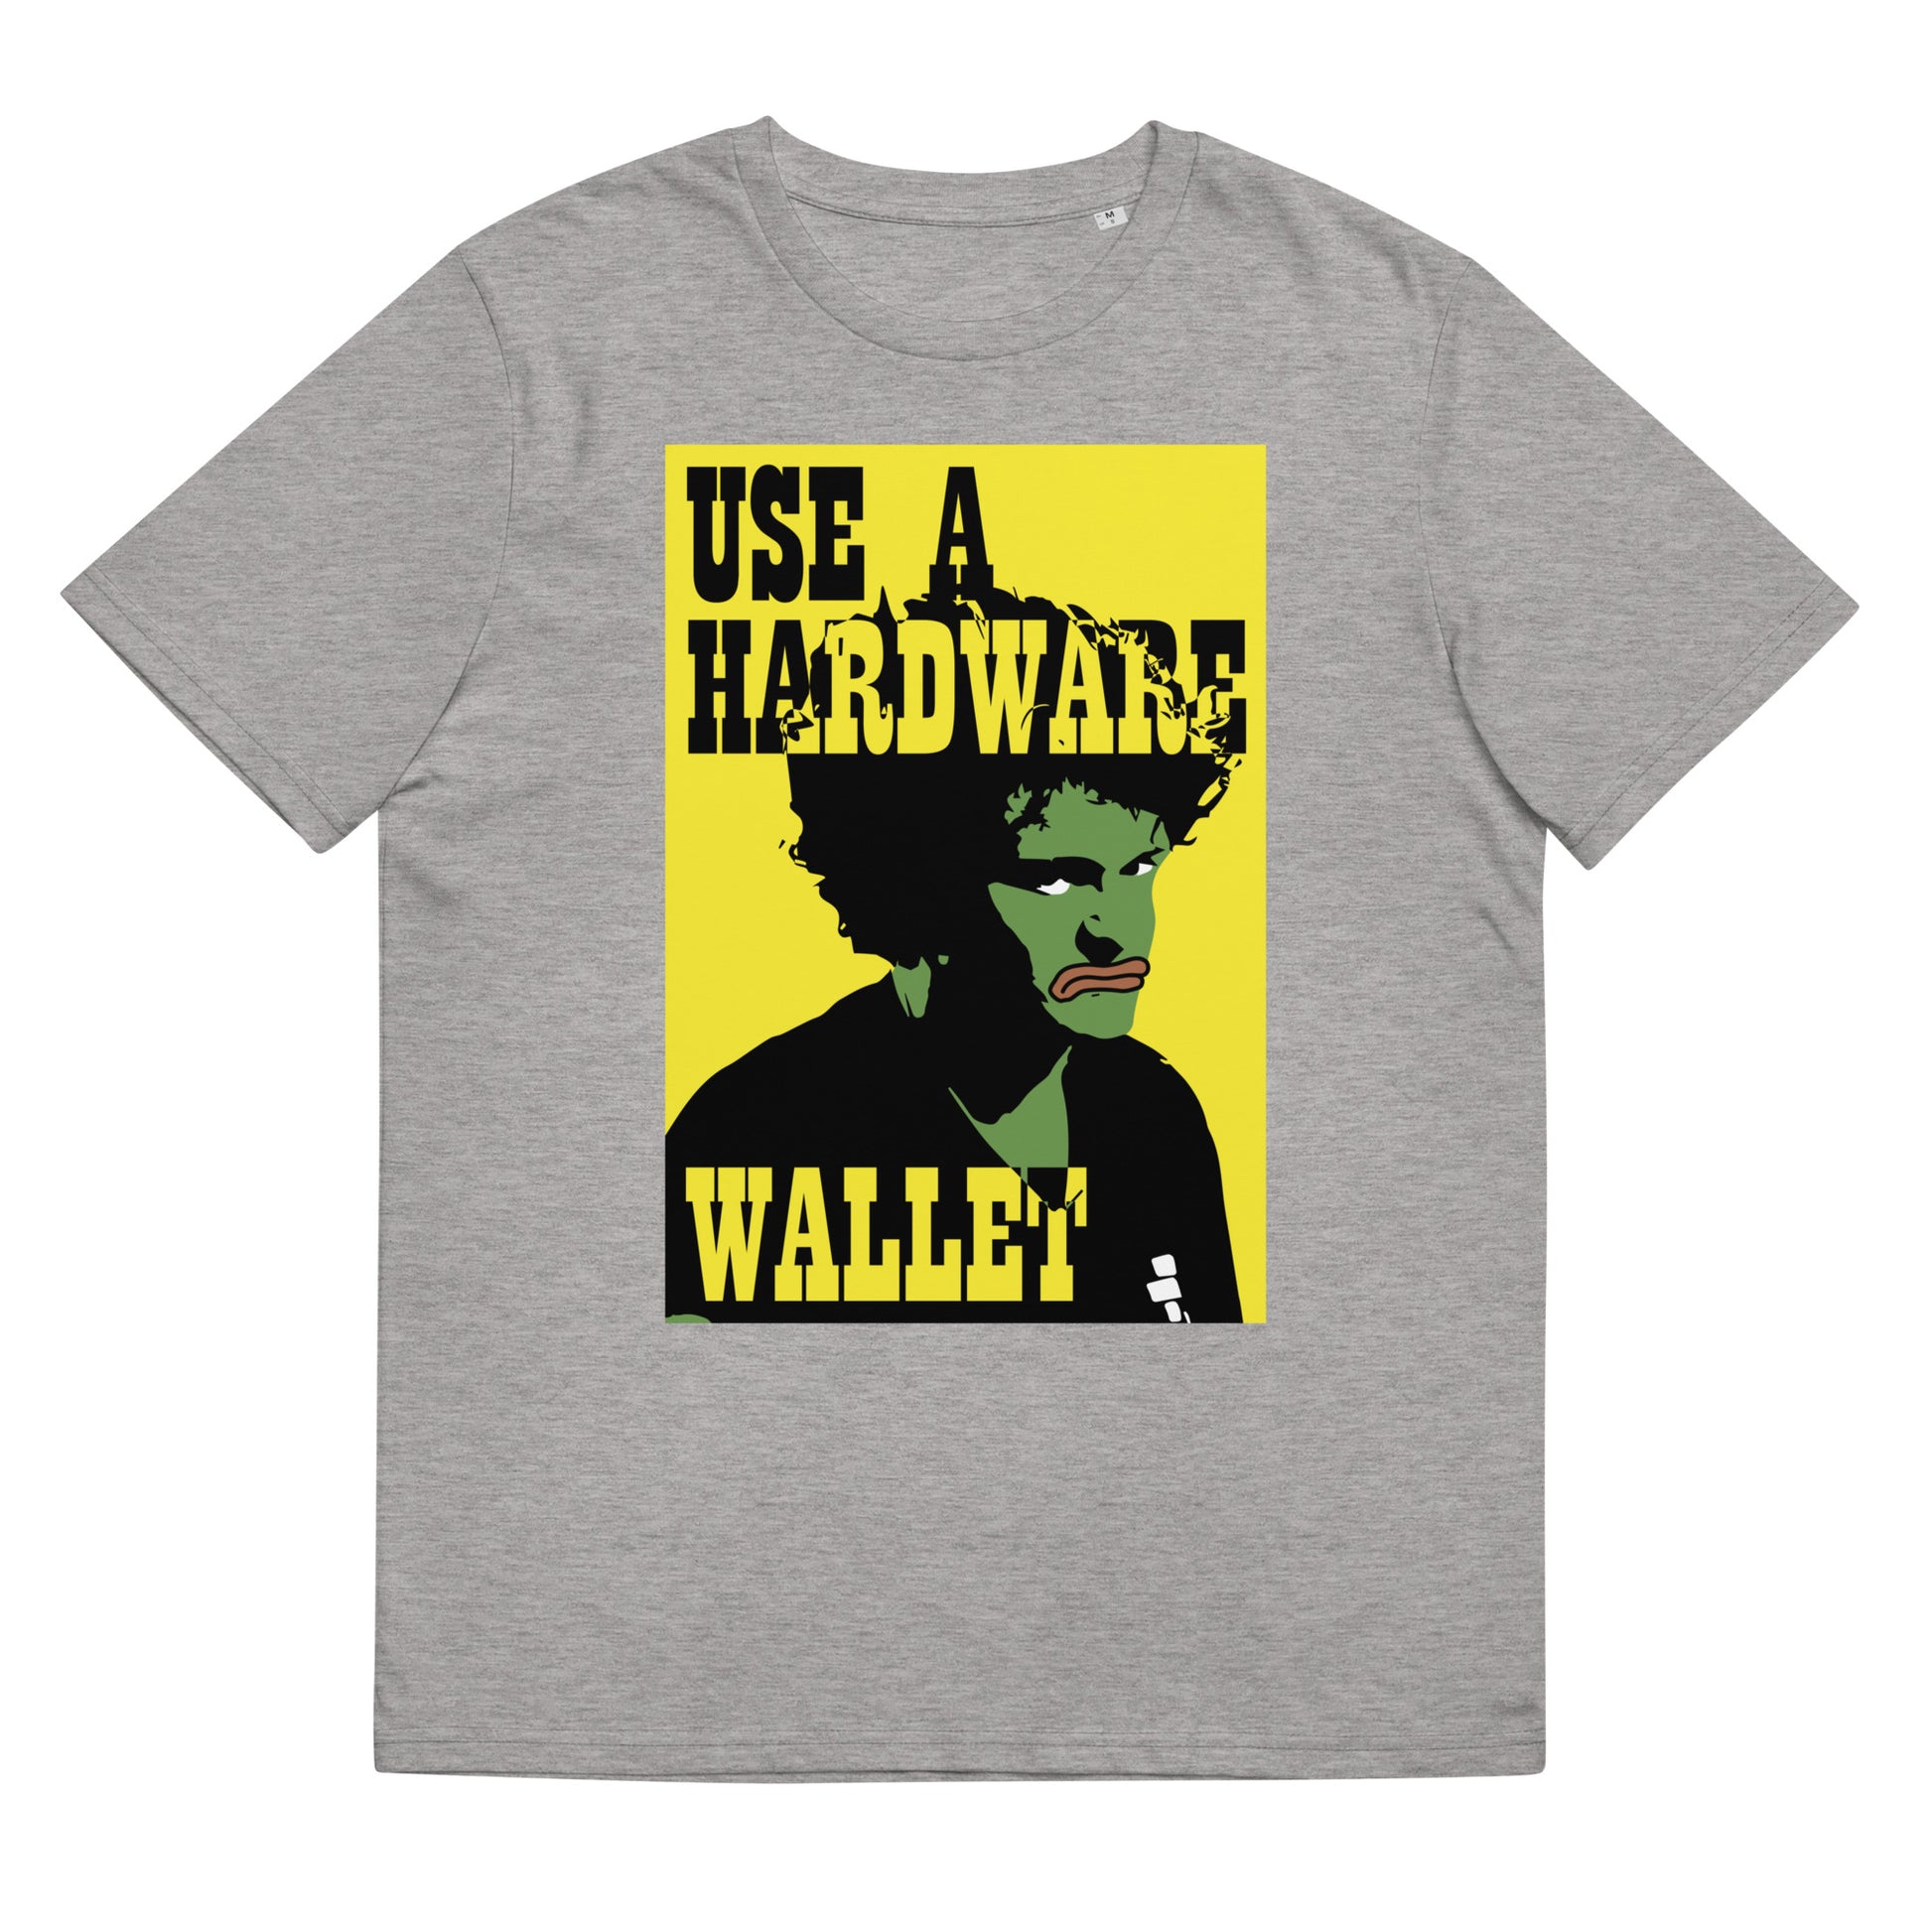 use-hardware-wallet-t-shirt-heather-grey